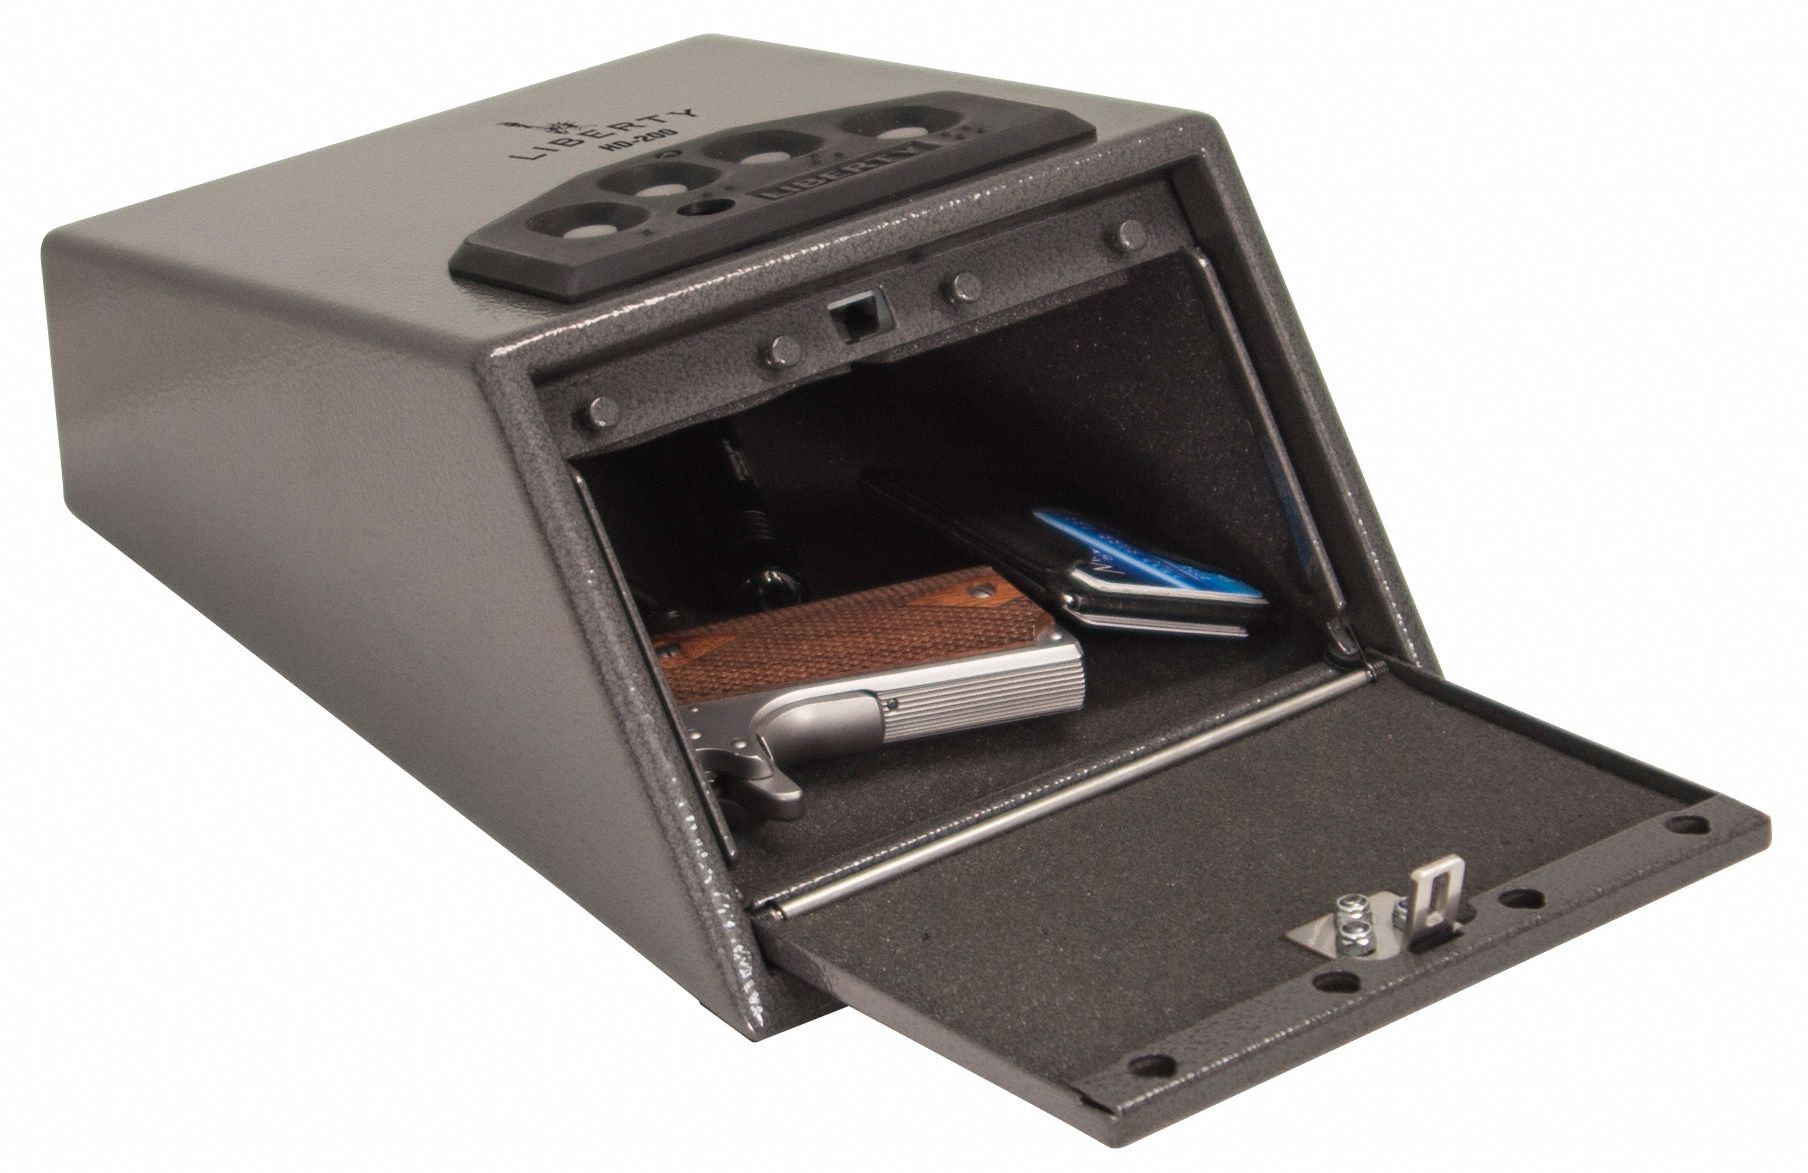 LIBERTY SAFE Handgun Vault, 8.4 lb Net Weight, Not Rated Fire Rating, Electronic Lock Style